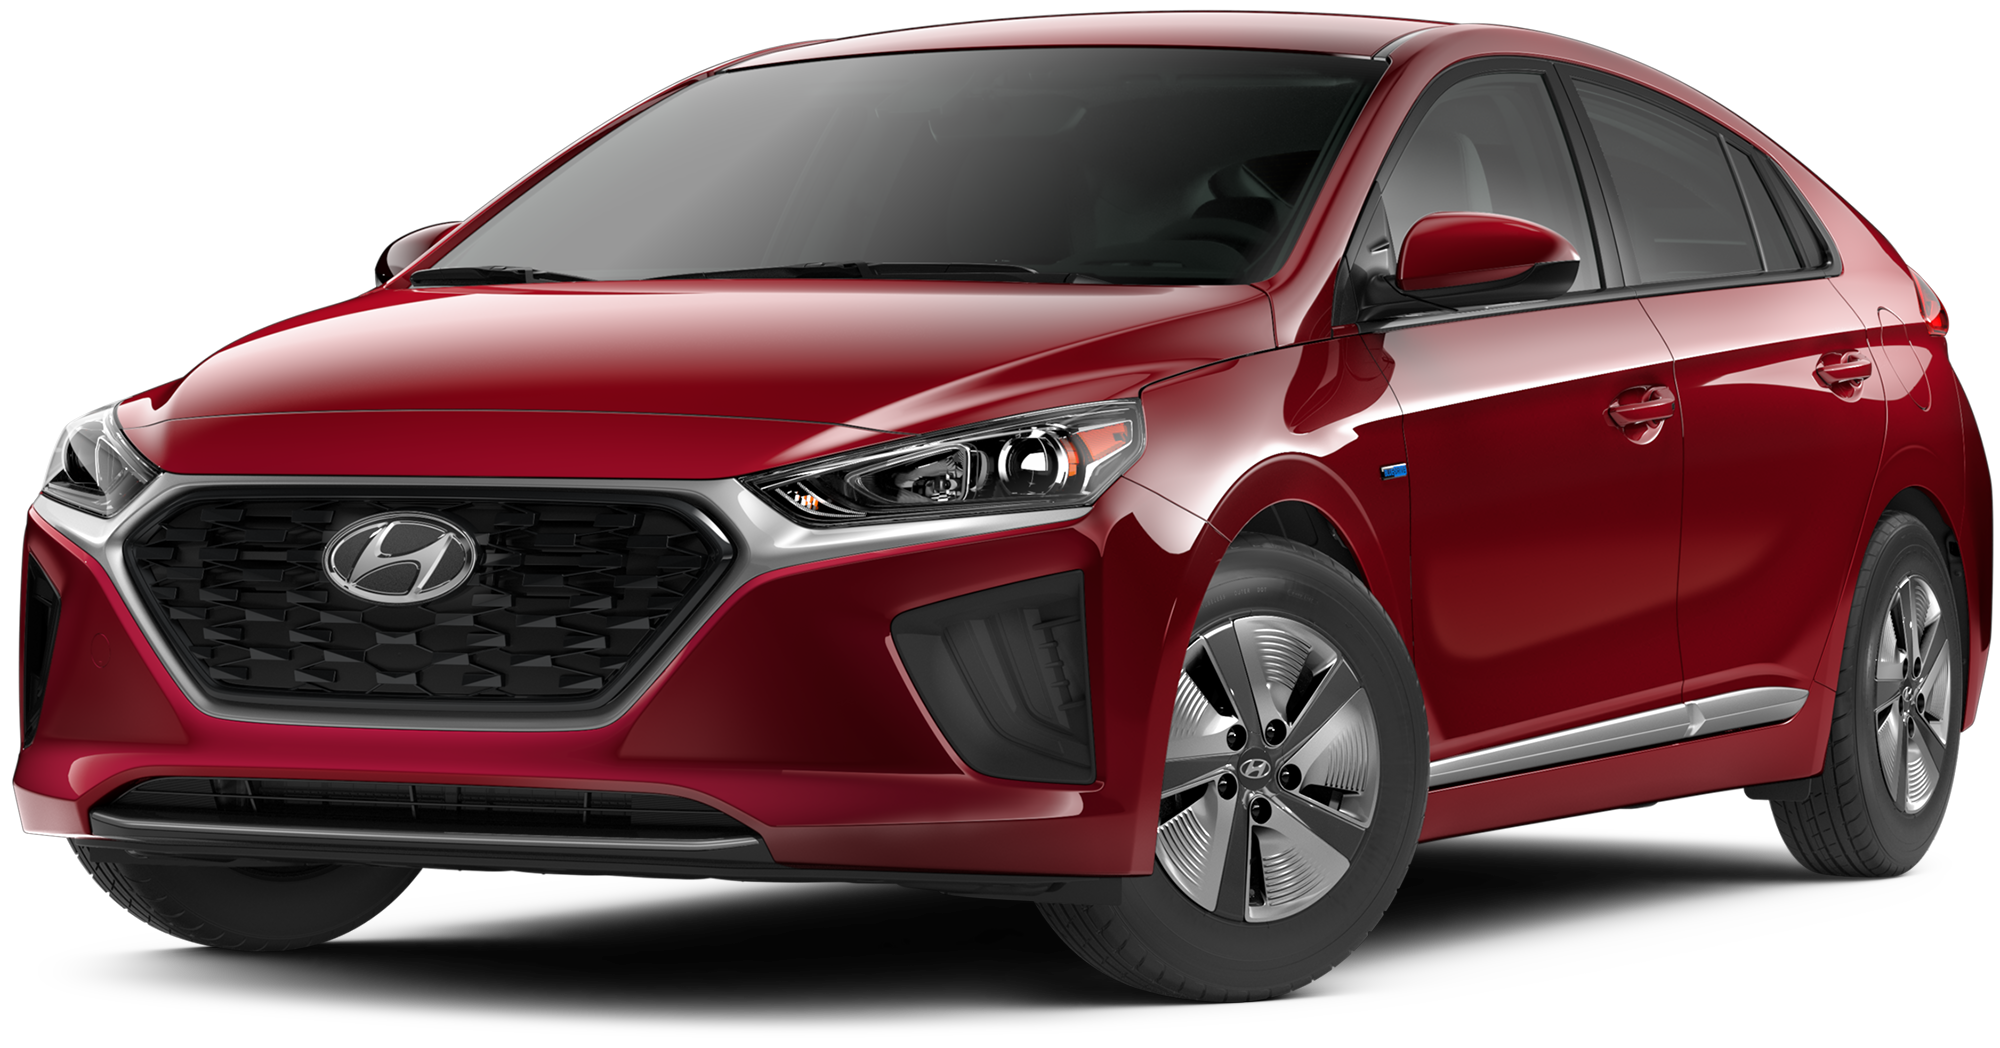 2020 Hyundai Ioniq Hybrid Incentives Rebates Specials At Dealer Near Me 